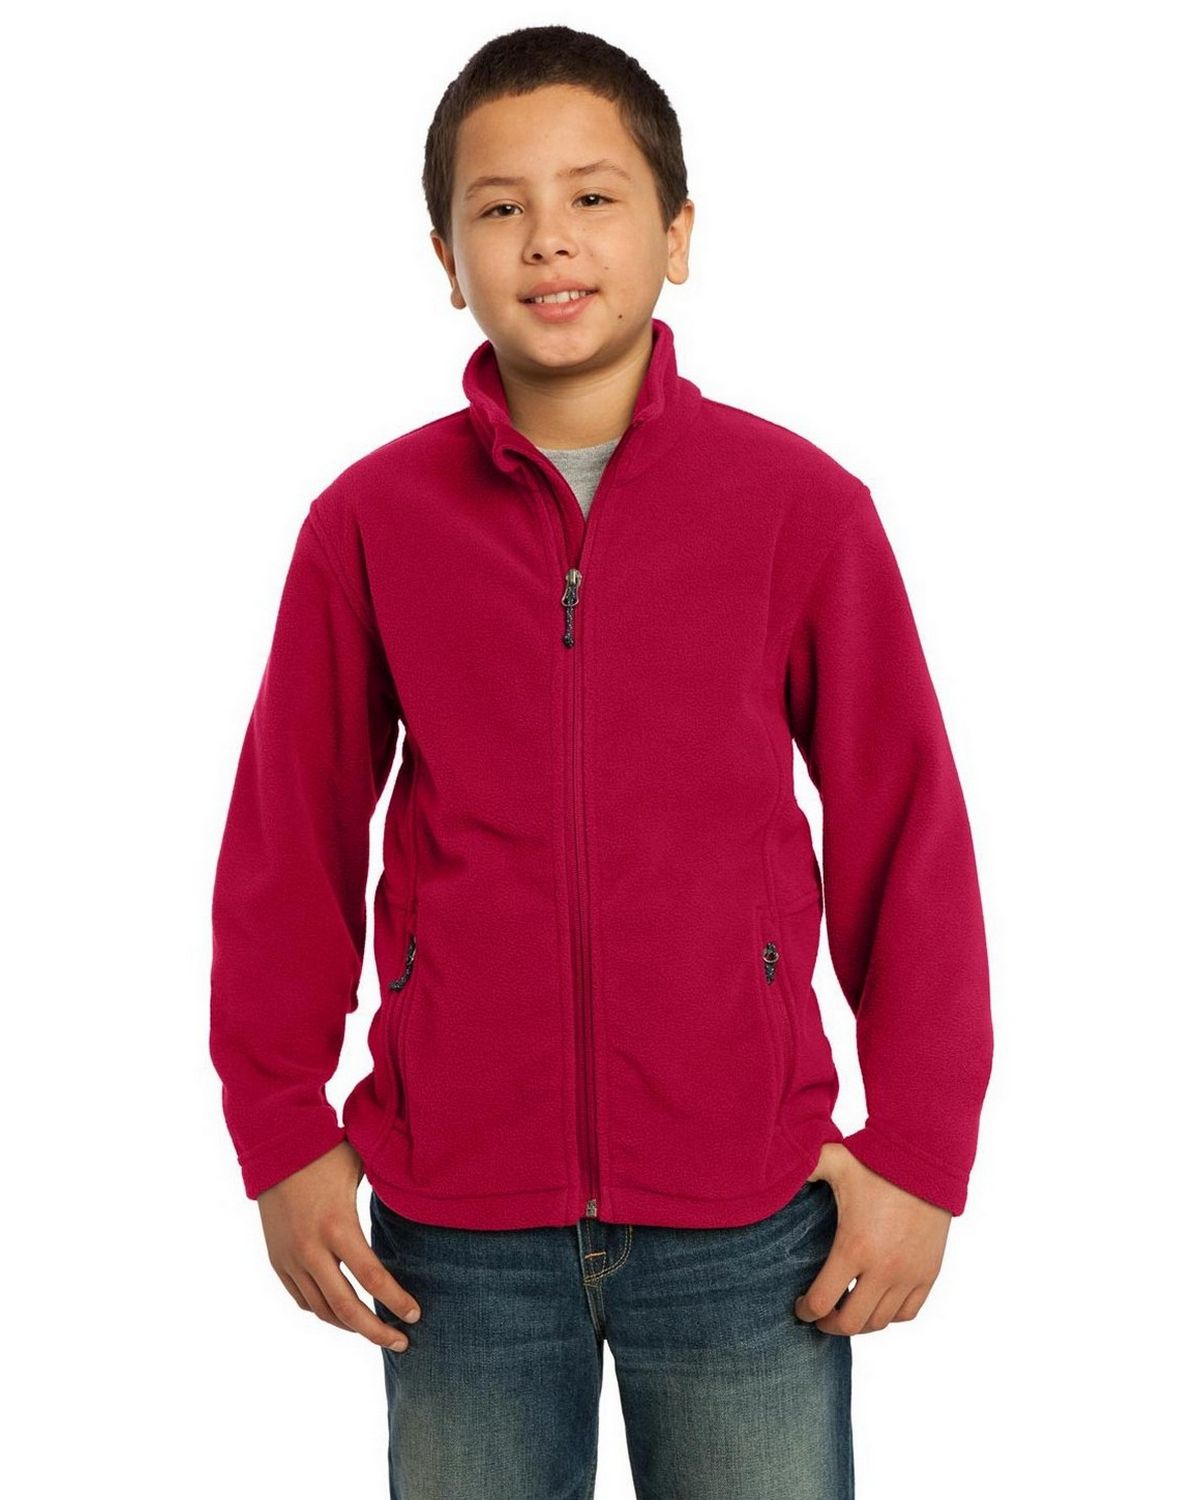 Y217 Port Authority Youth Value Fleece Jacket